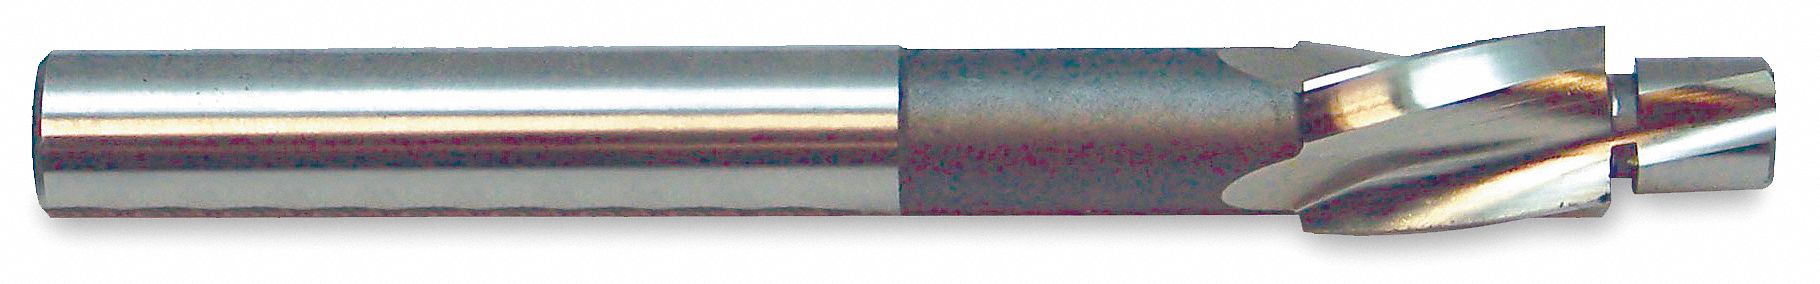 KEO 56221 Cobalt Steel Precision 3 Flutes Cap Screw Counterbore Uncoated Integral Pilot Bright Finish Before Thread Size M12 